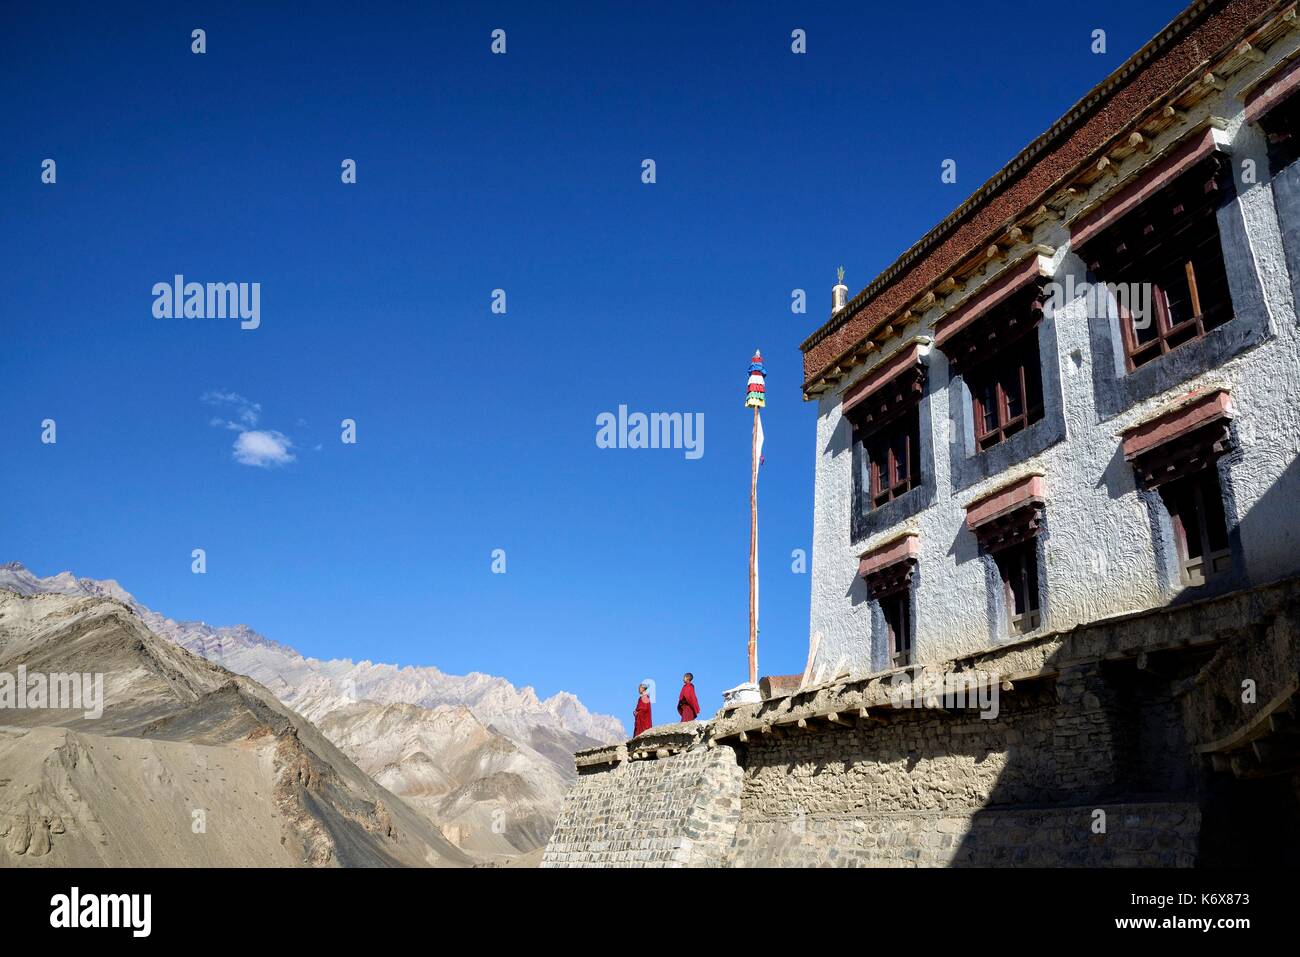 India, dello Stato del Jammu e Kashmir, Himalaya, Ladakh, Indus Valle, i monaci nel monastero buddista di Lamayuru (Yungdrung) Foto Stock